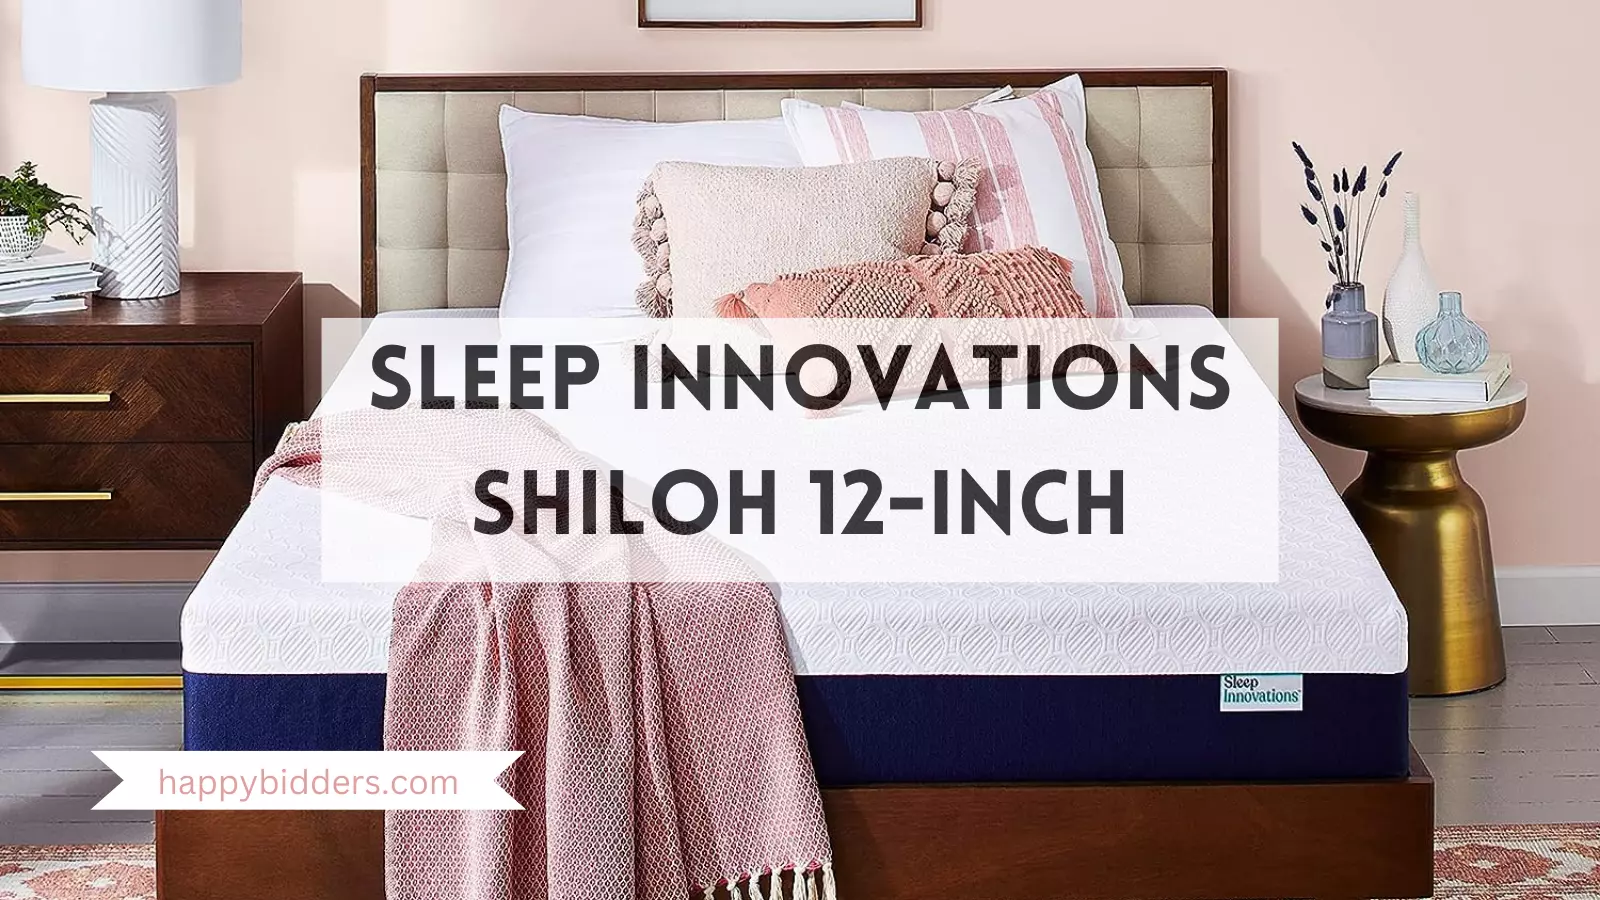 Sleep Innovations Shiloh 12-inch